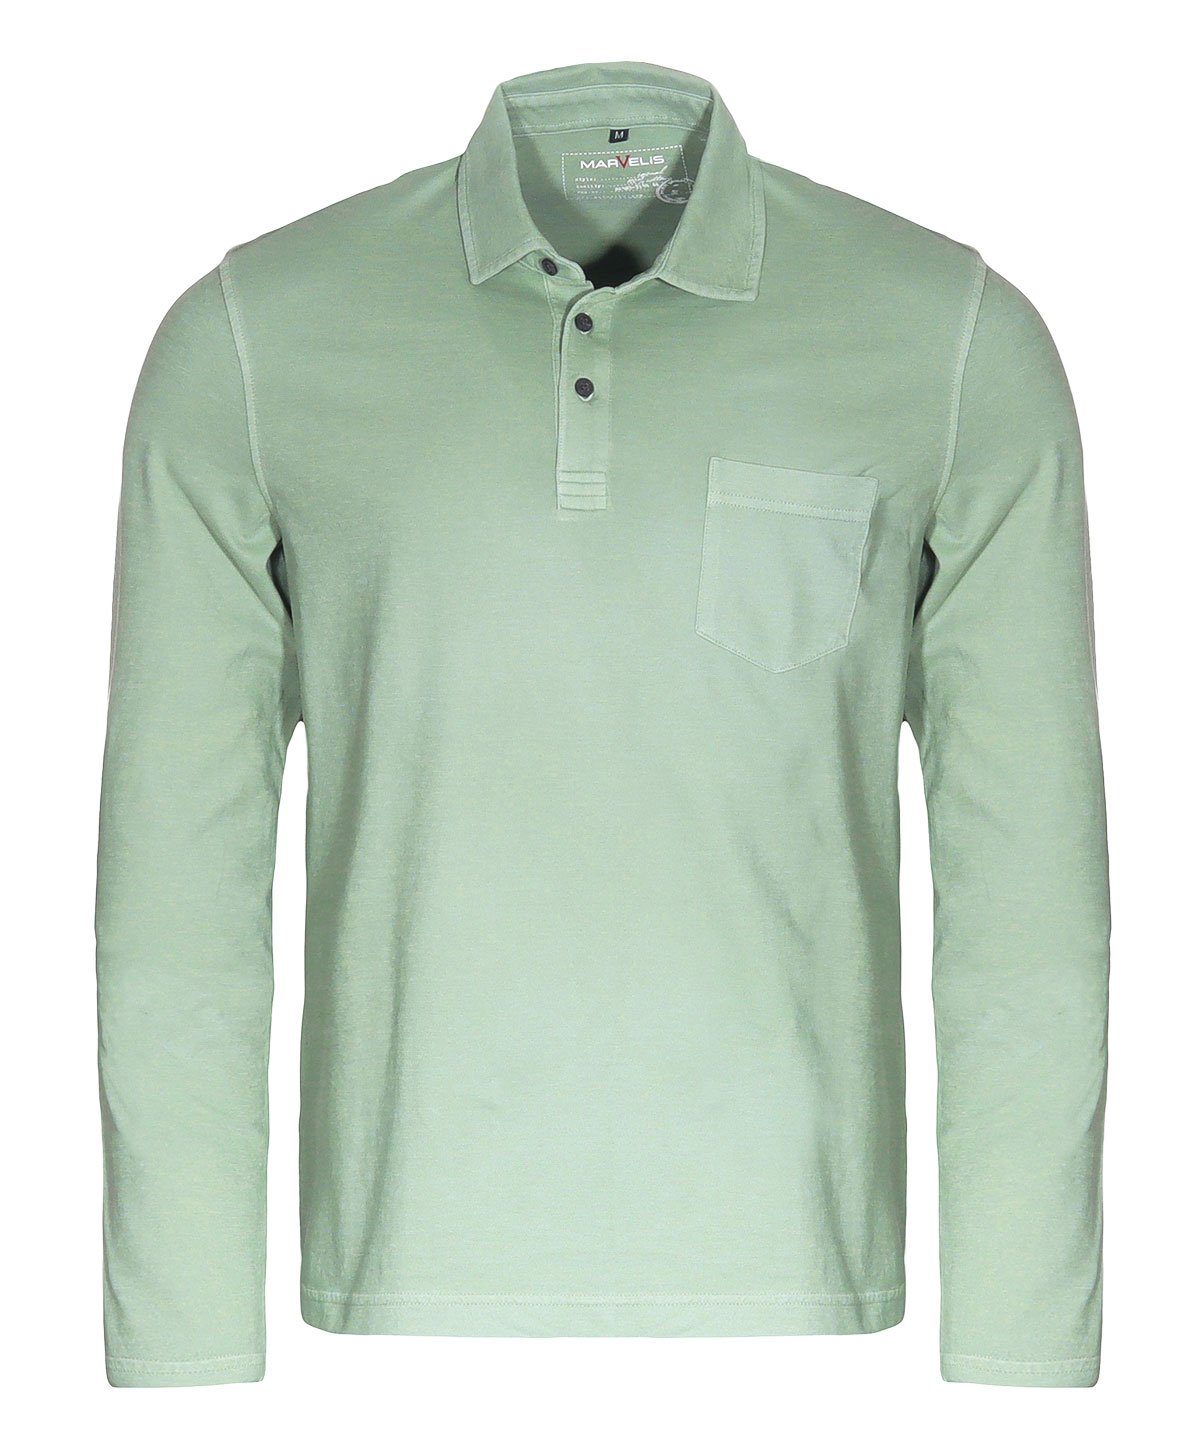 - Einfarbig Poloshirt Casual MARVELIS Hellgrün Polokragen - Fit - Poloshirt -